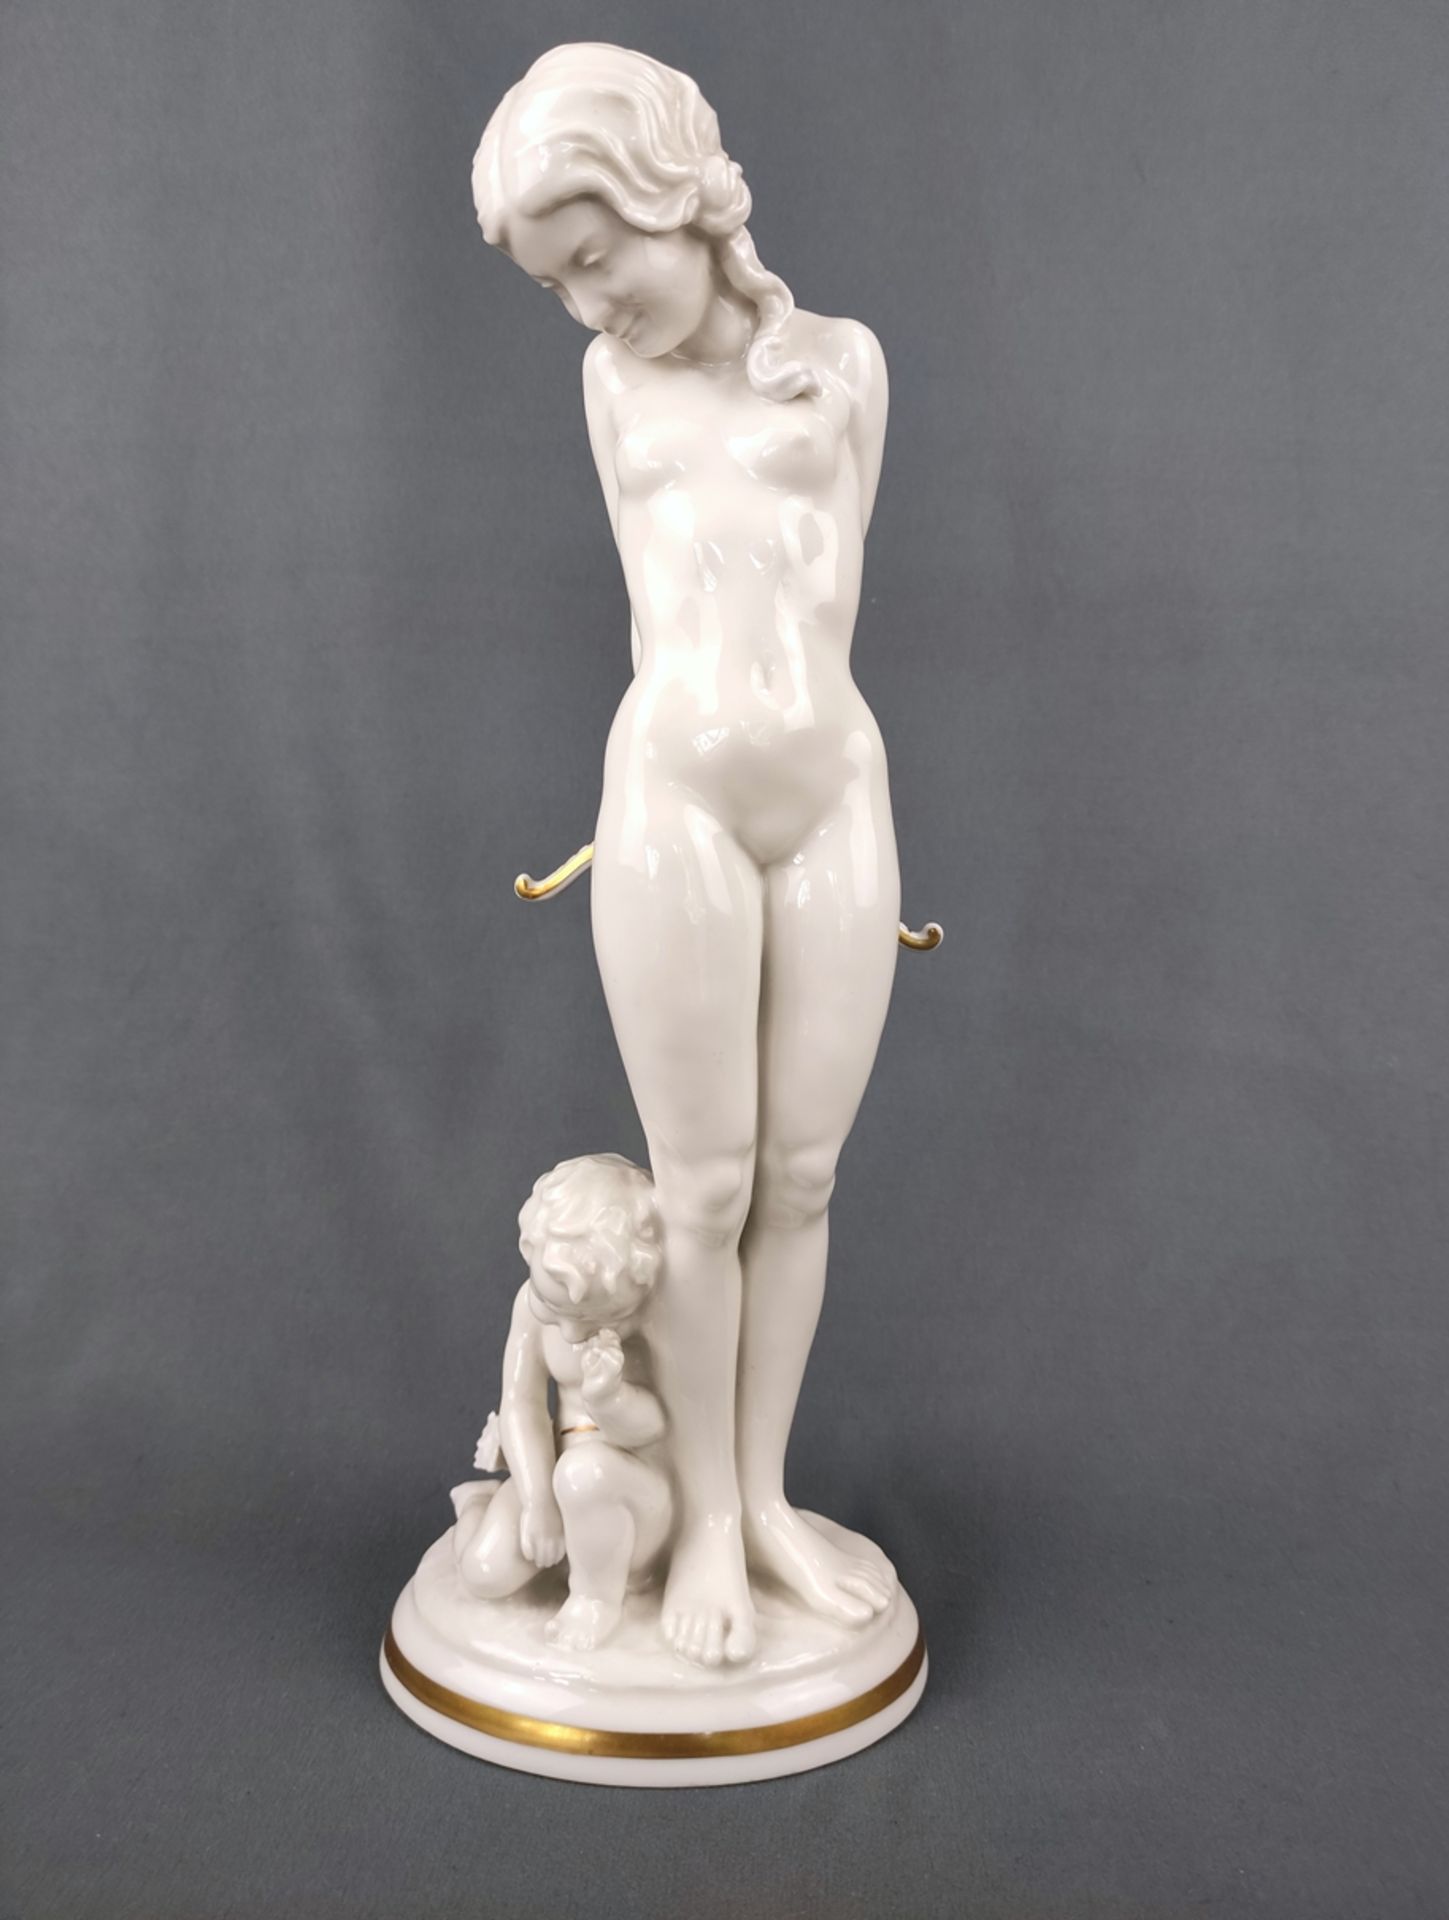 Porcelain group, "Disarmed", Hutschenreuther, art department Selb, design Carl Werner, girl nude wi